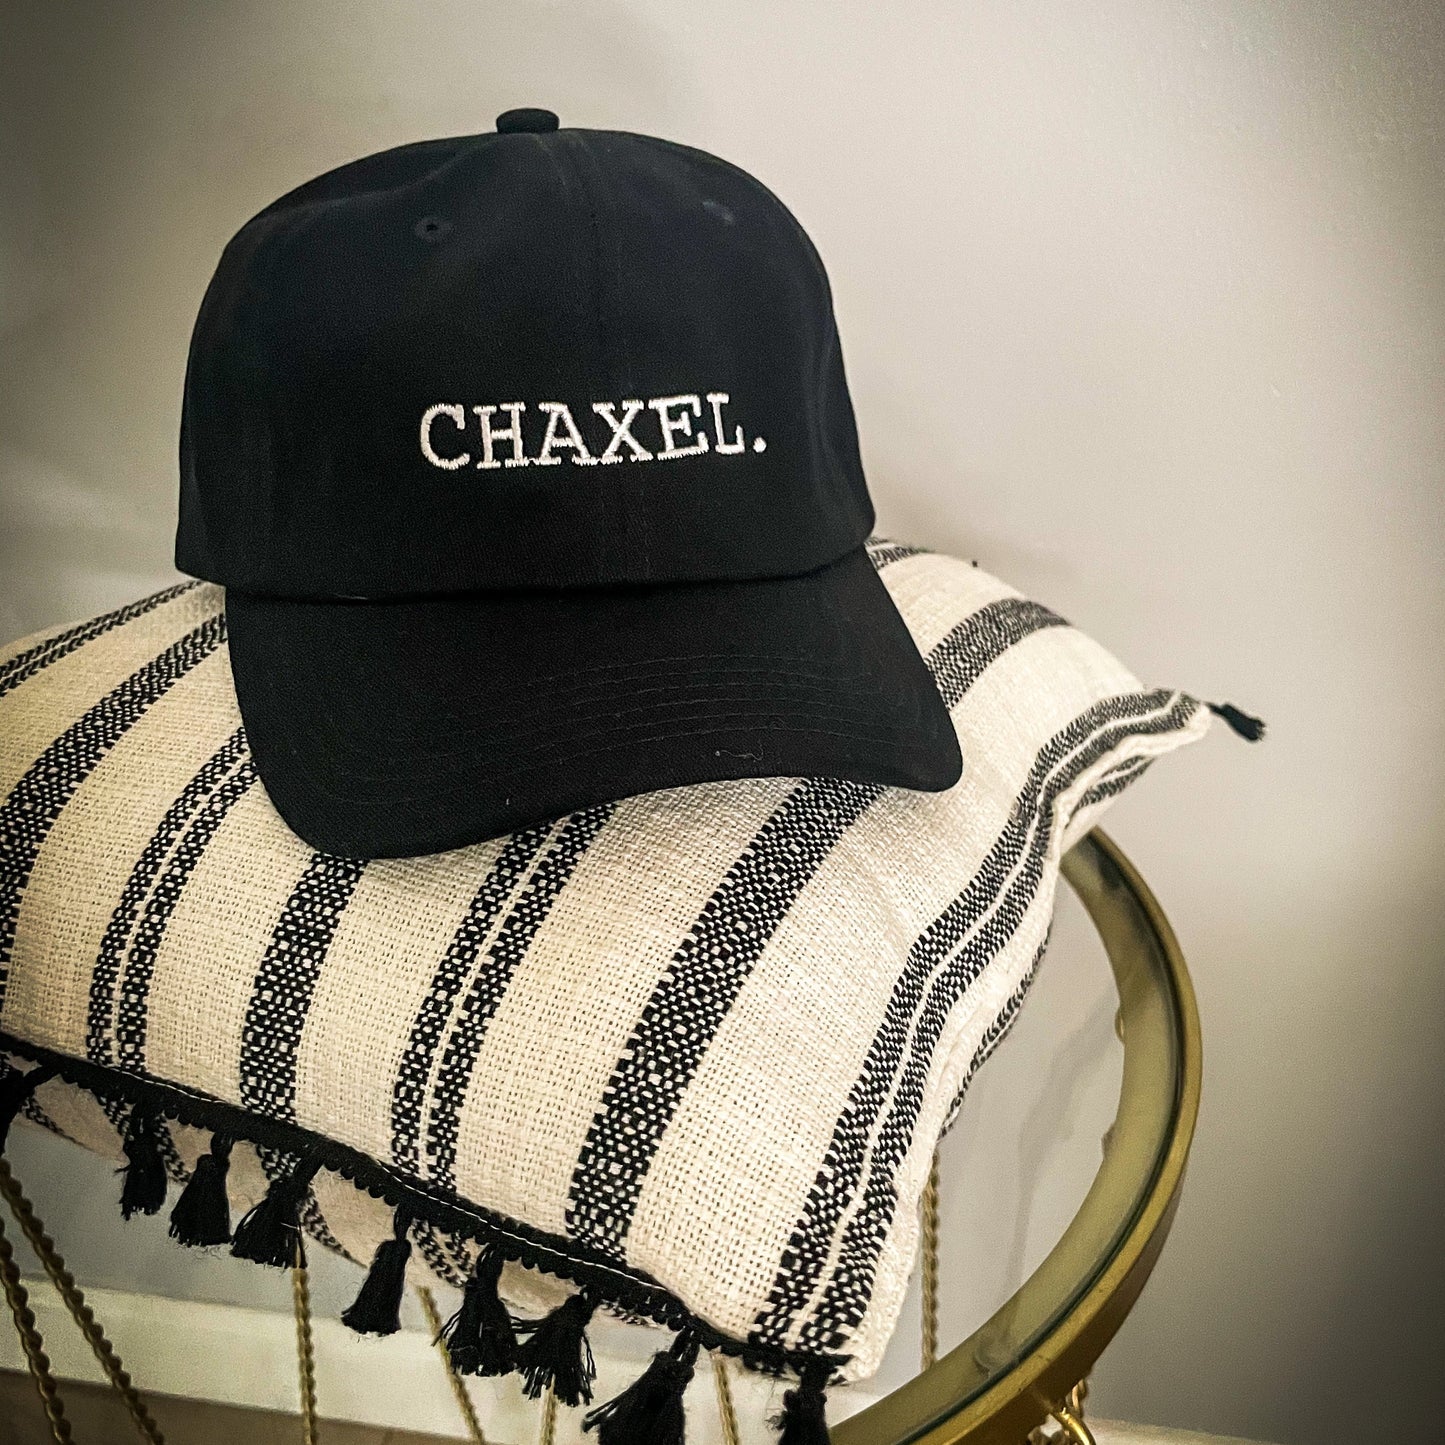 CHAXEL Dad Hat